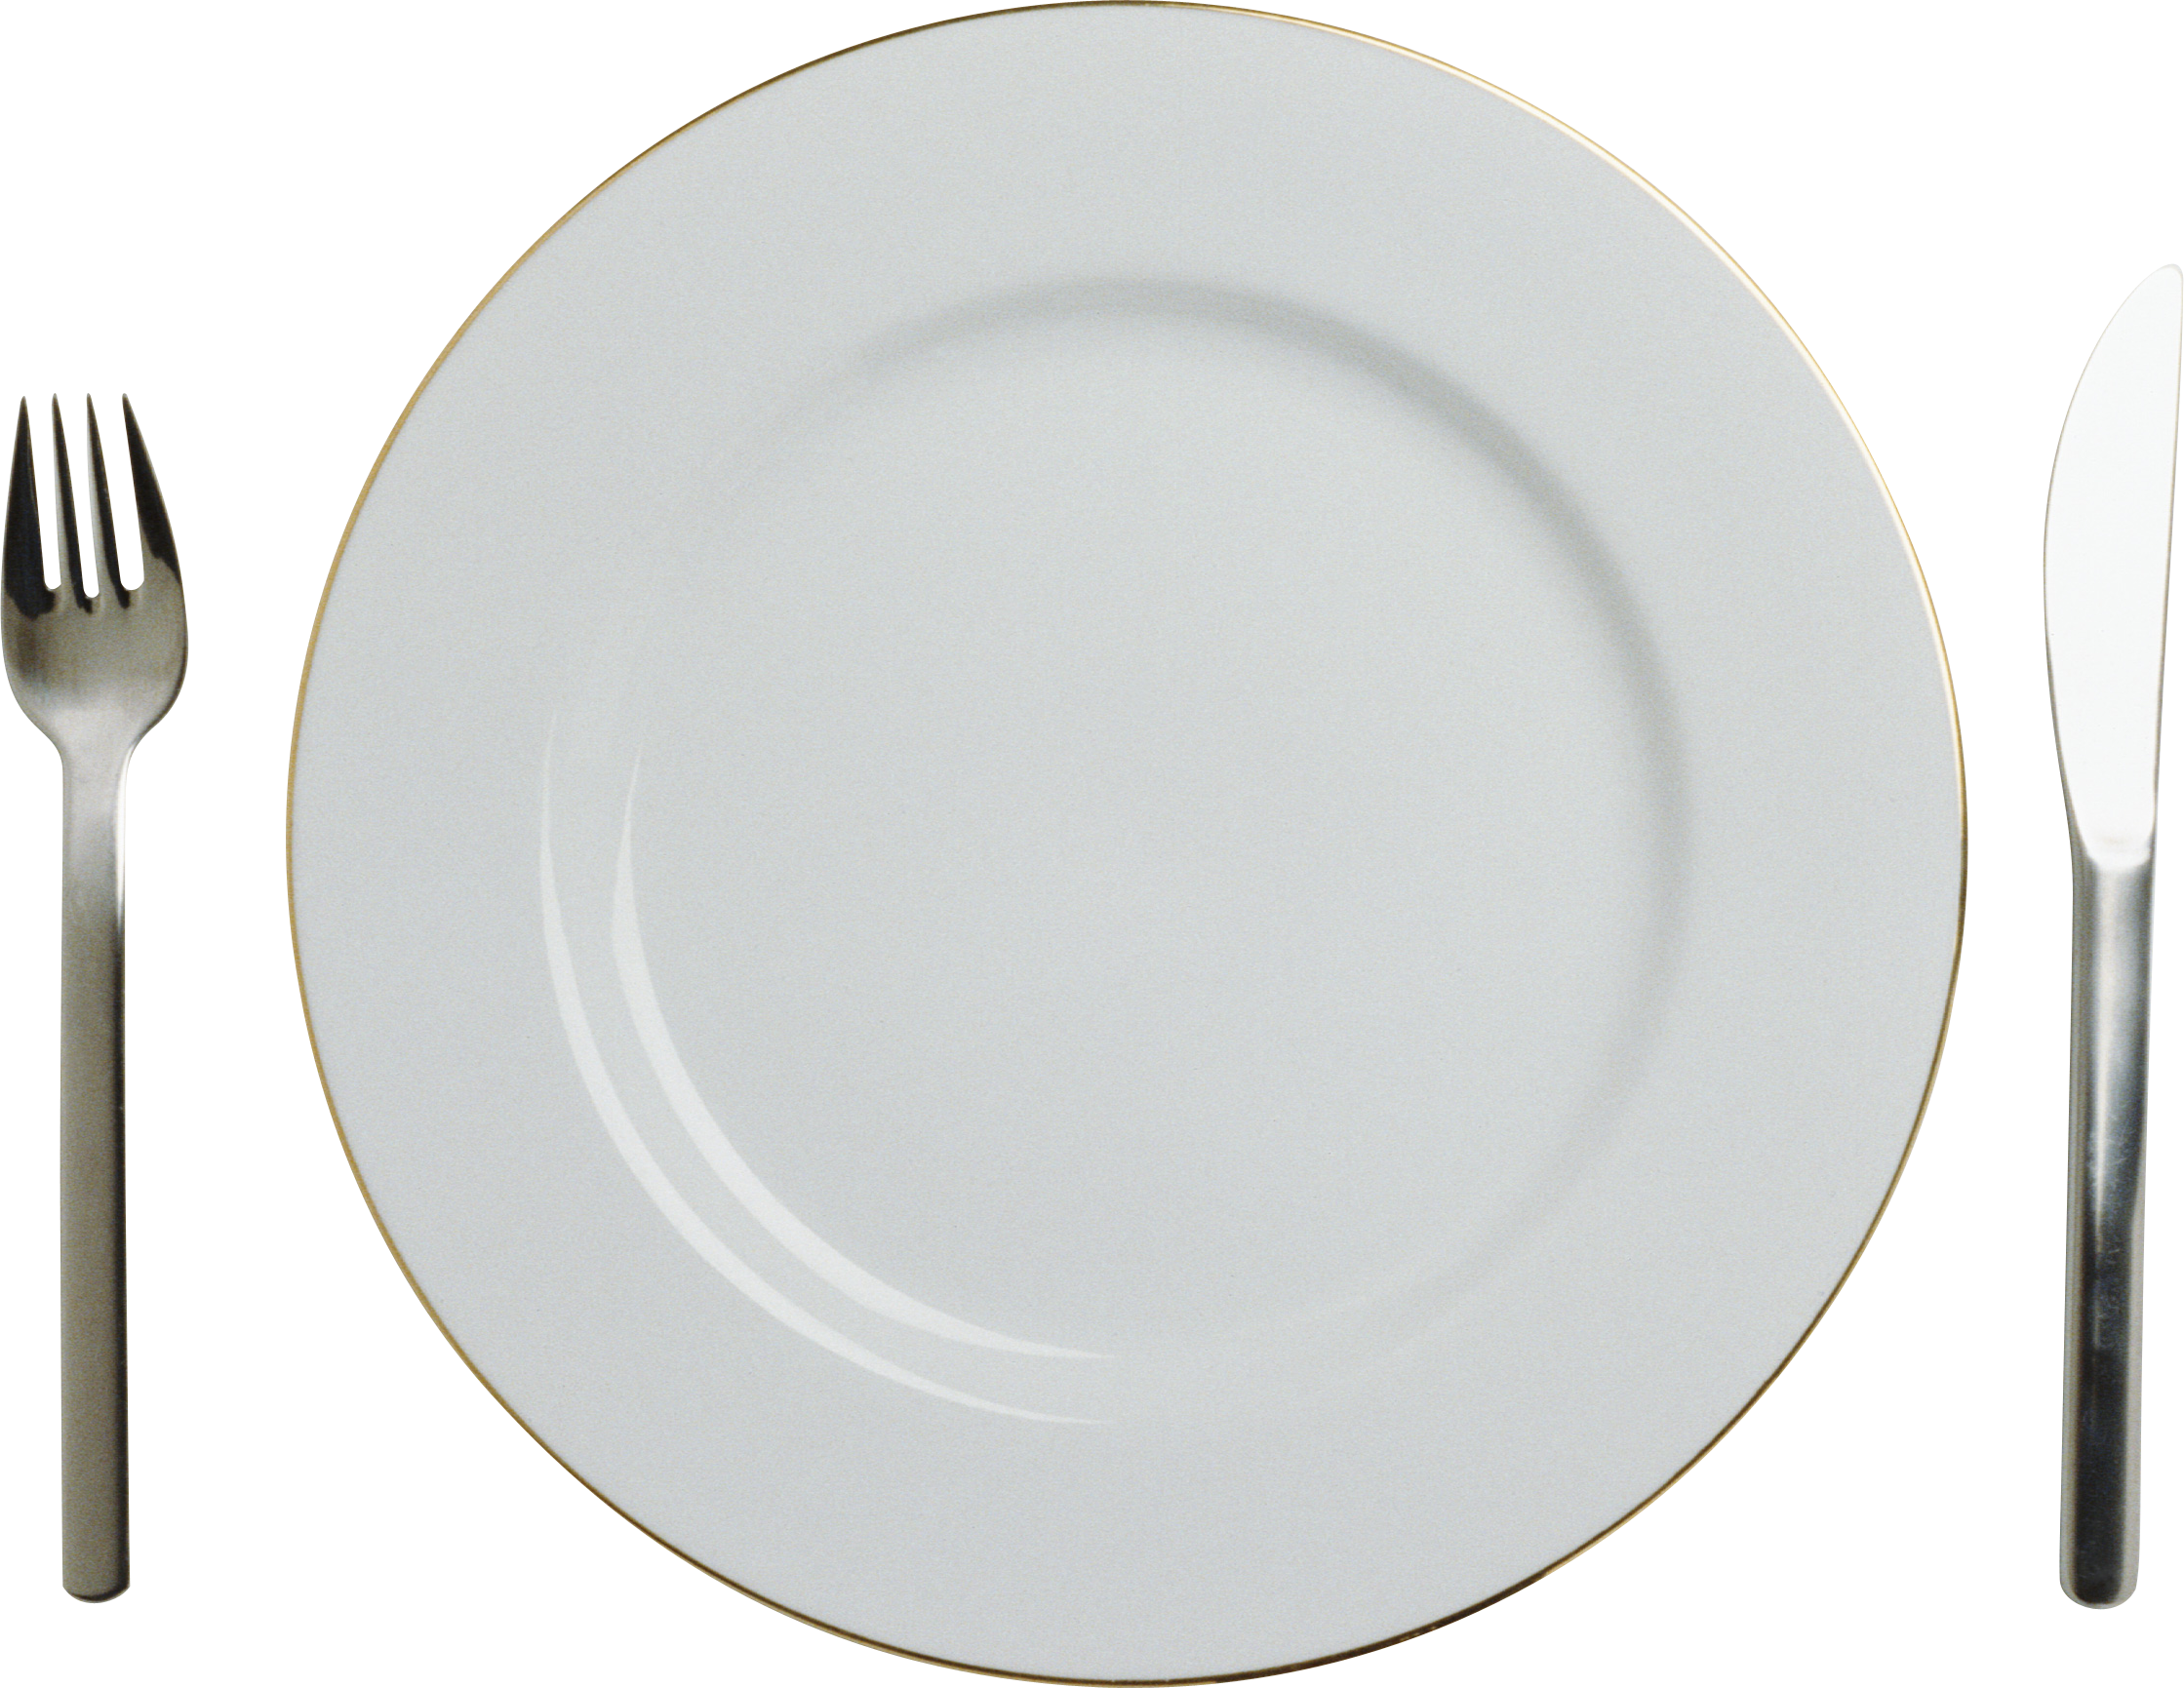 Dinner Plate PNG Transparent Images 9.